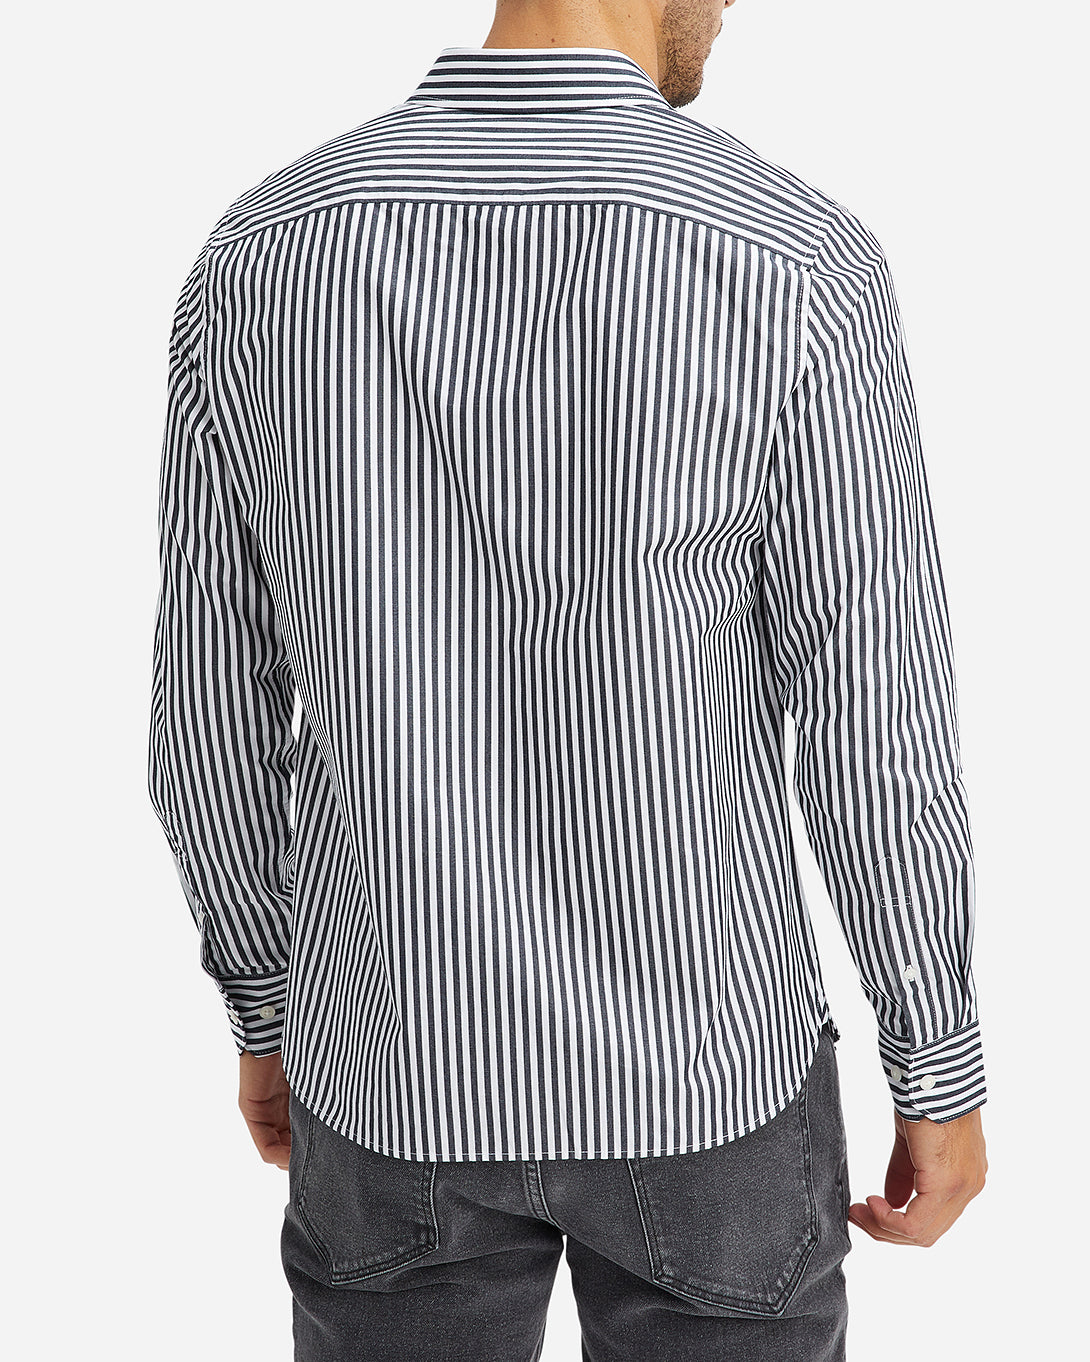 Black and White Stripe Adrian Shirt Mens O.N.S FW22